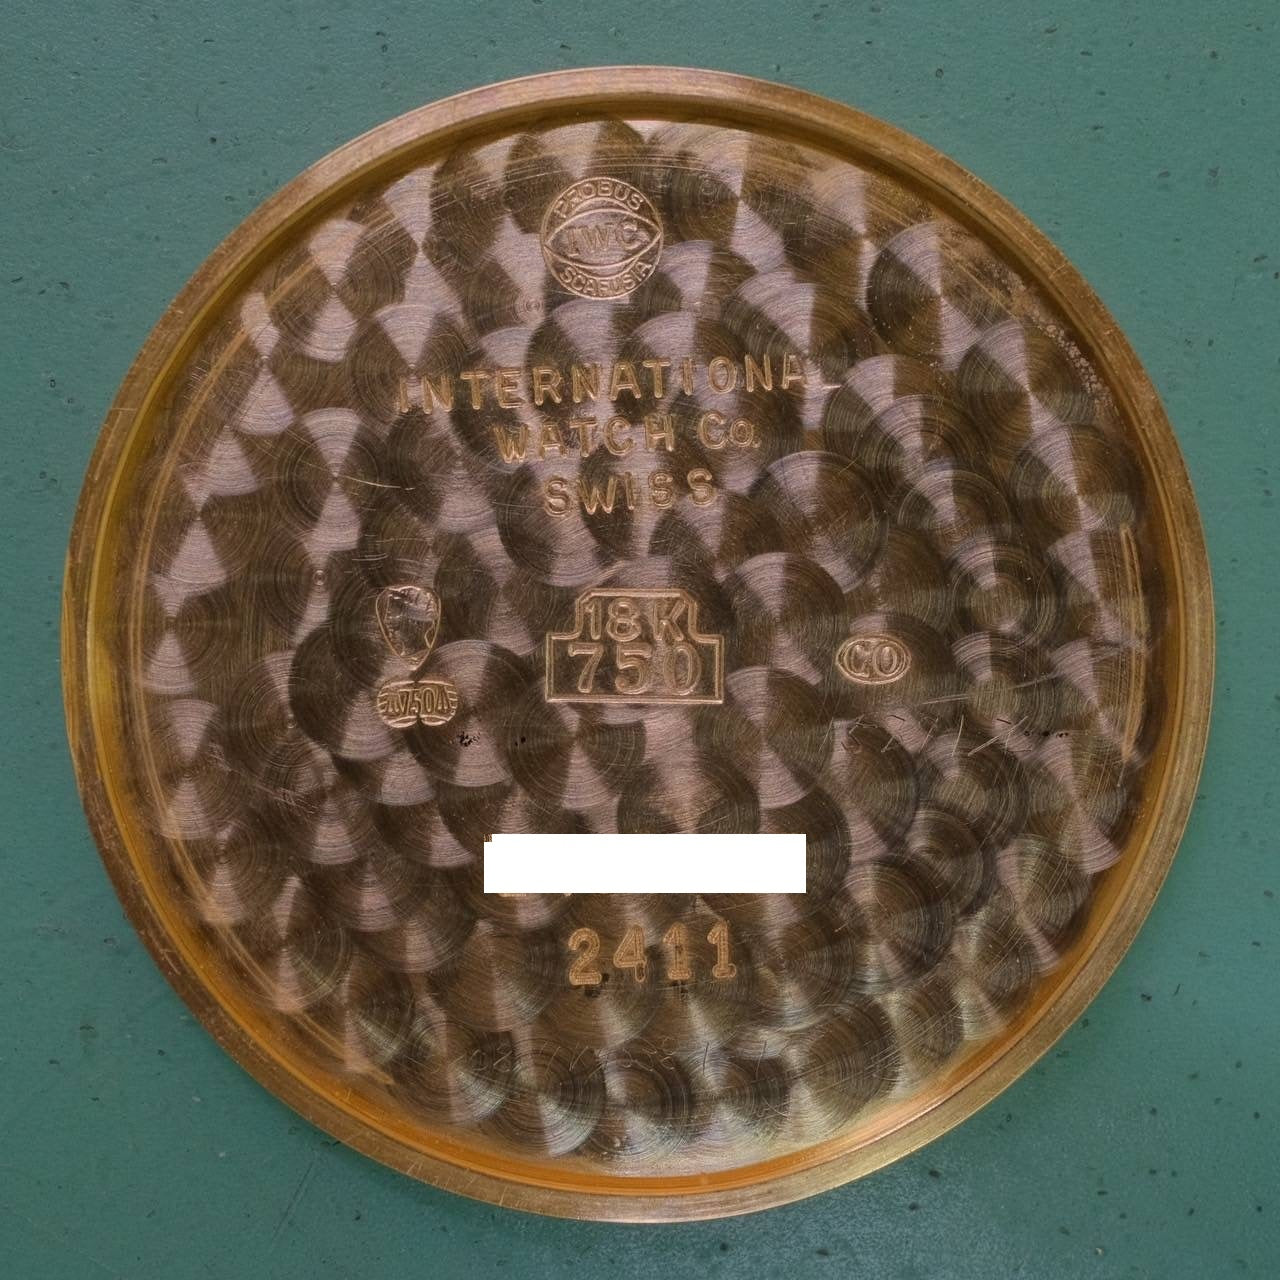 IWC PORTOFINO 2411 125th Anniversary Model Hand-wound Cal.1852 750 Leather Genuine Buckle (750) White Dial 34.0mm